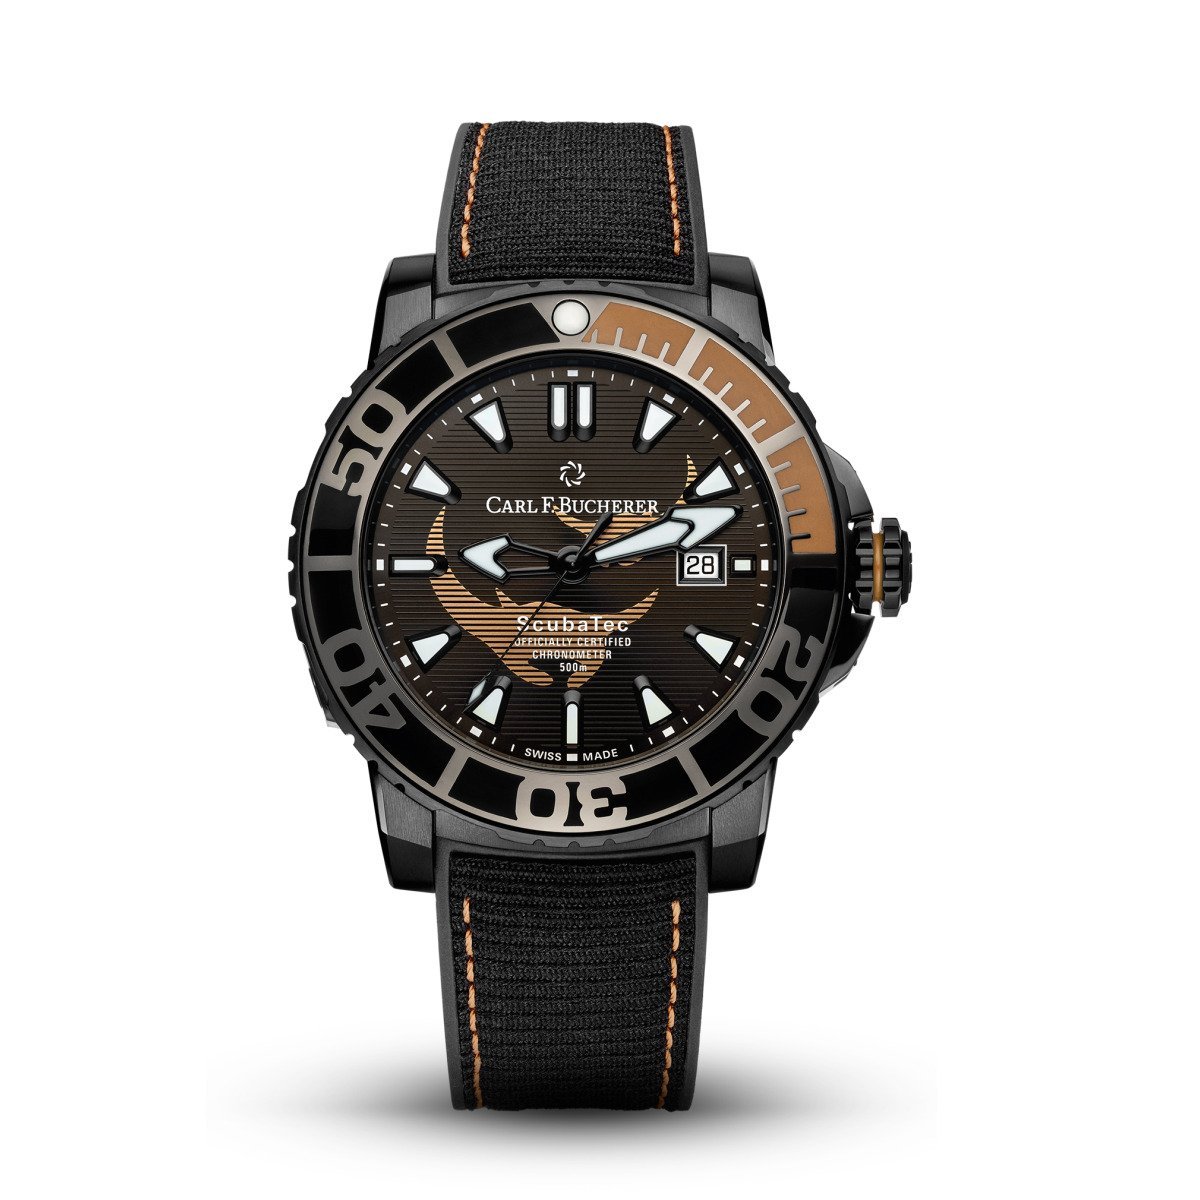 Carl F. Bucherer "Patravi" ScubaTec Black Manta Special Edition Watch